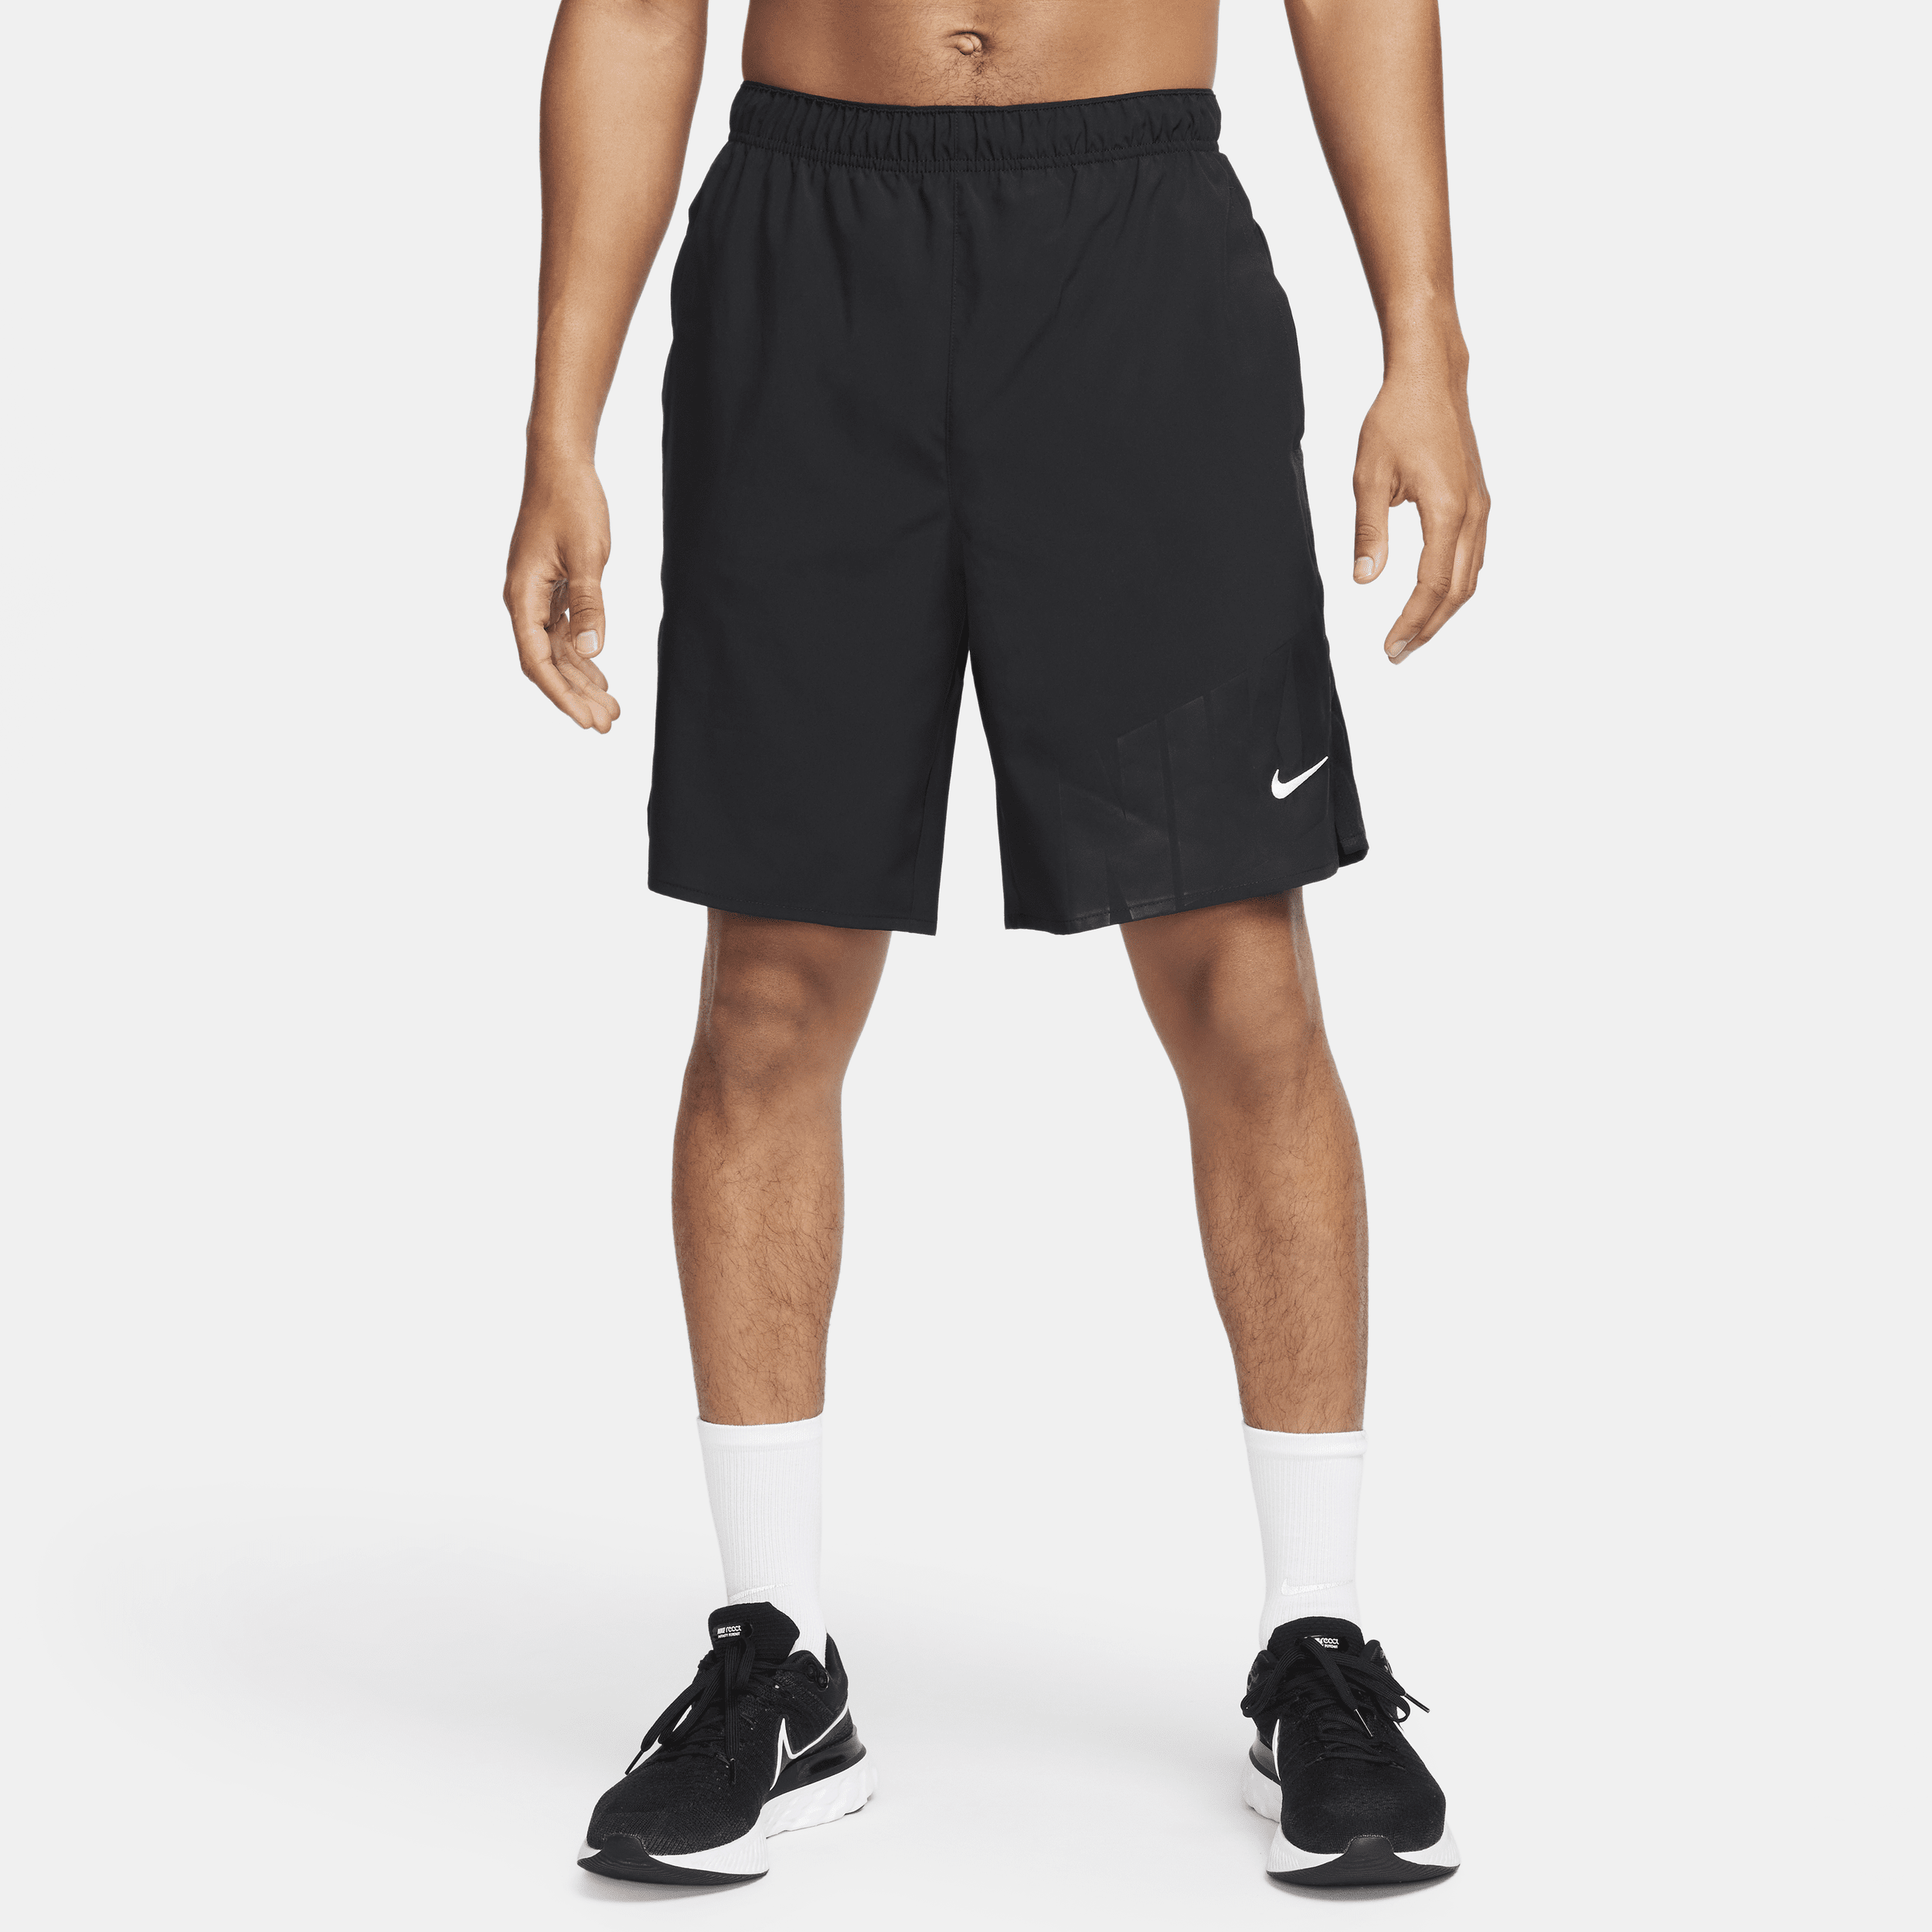 Shorts da running Dri-FIT non foderati 23 cm Nike Challenger – Uomo - Nero